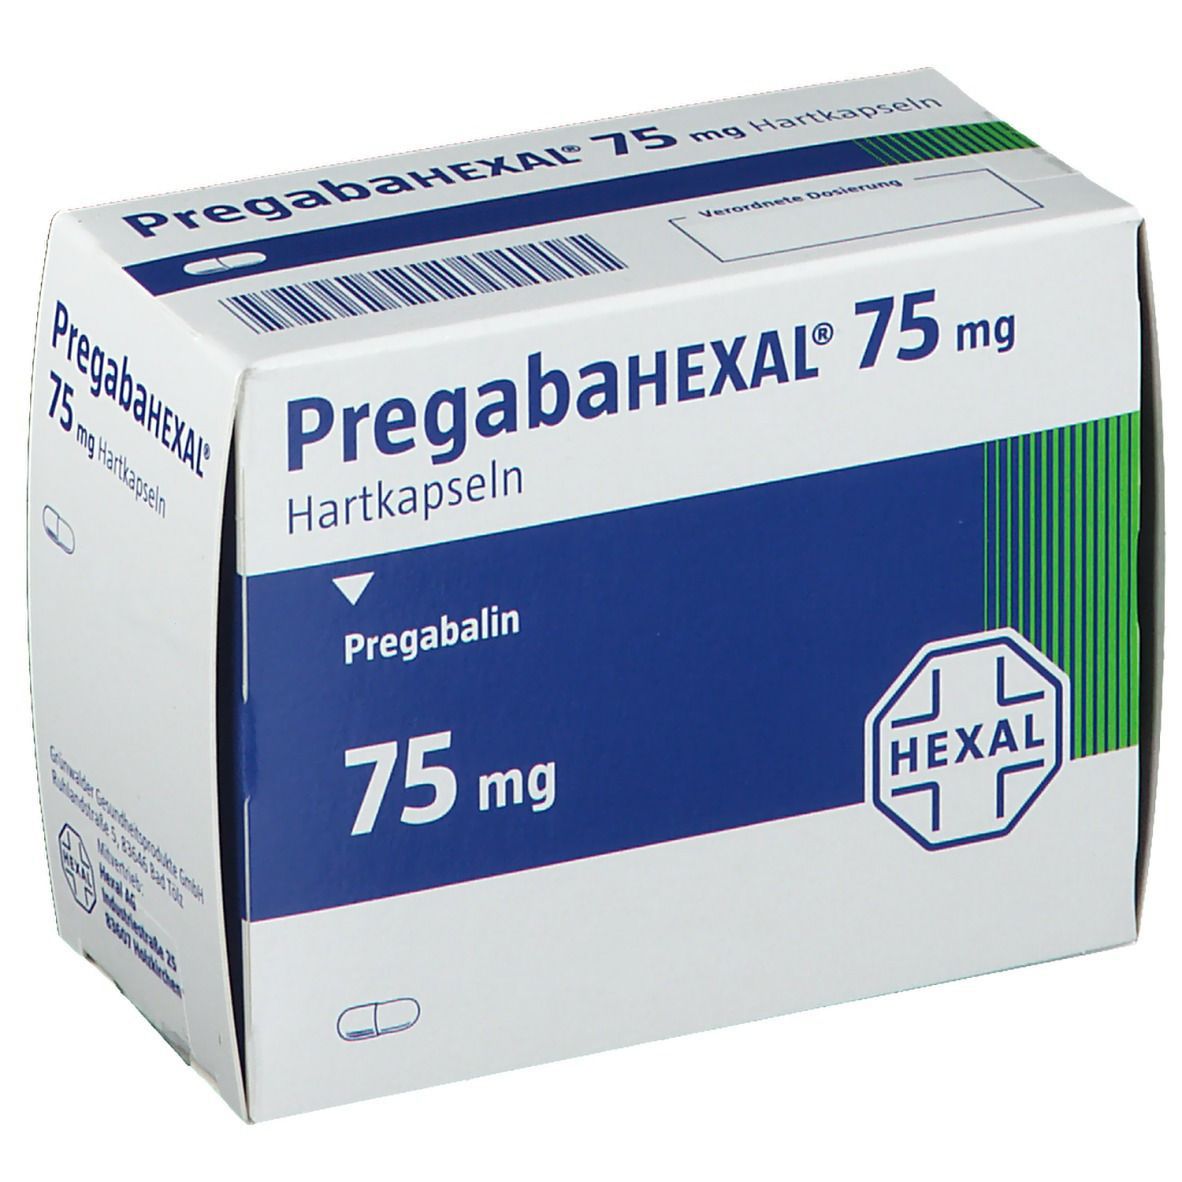 PregabaHEXAL® 75 mg